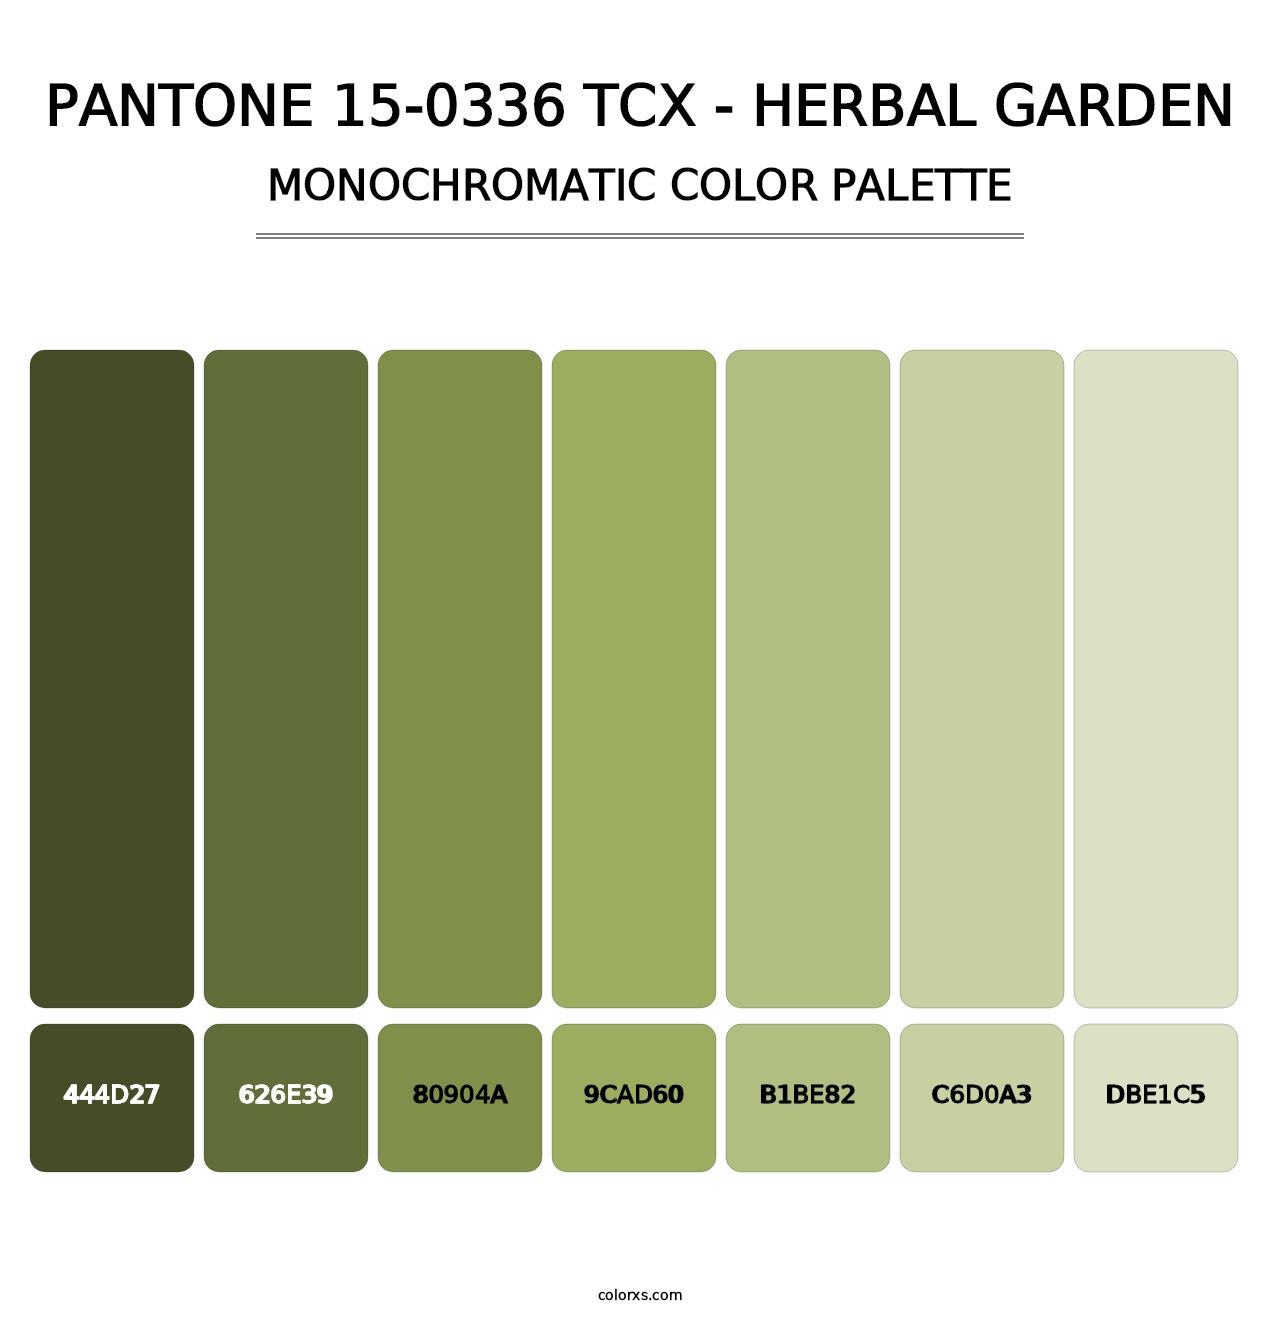 PANTONE 15-0336 TCX - Herbal Garden - Monochromatic Color Palette